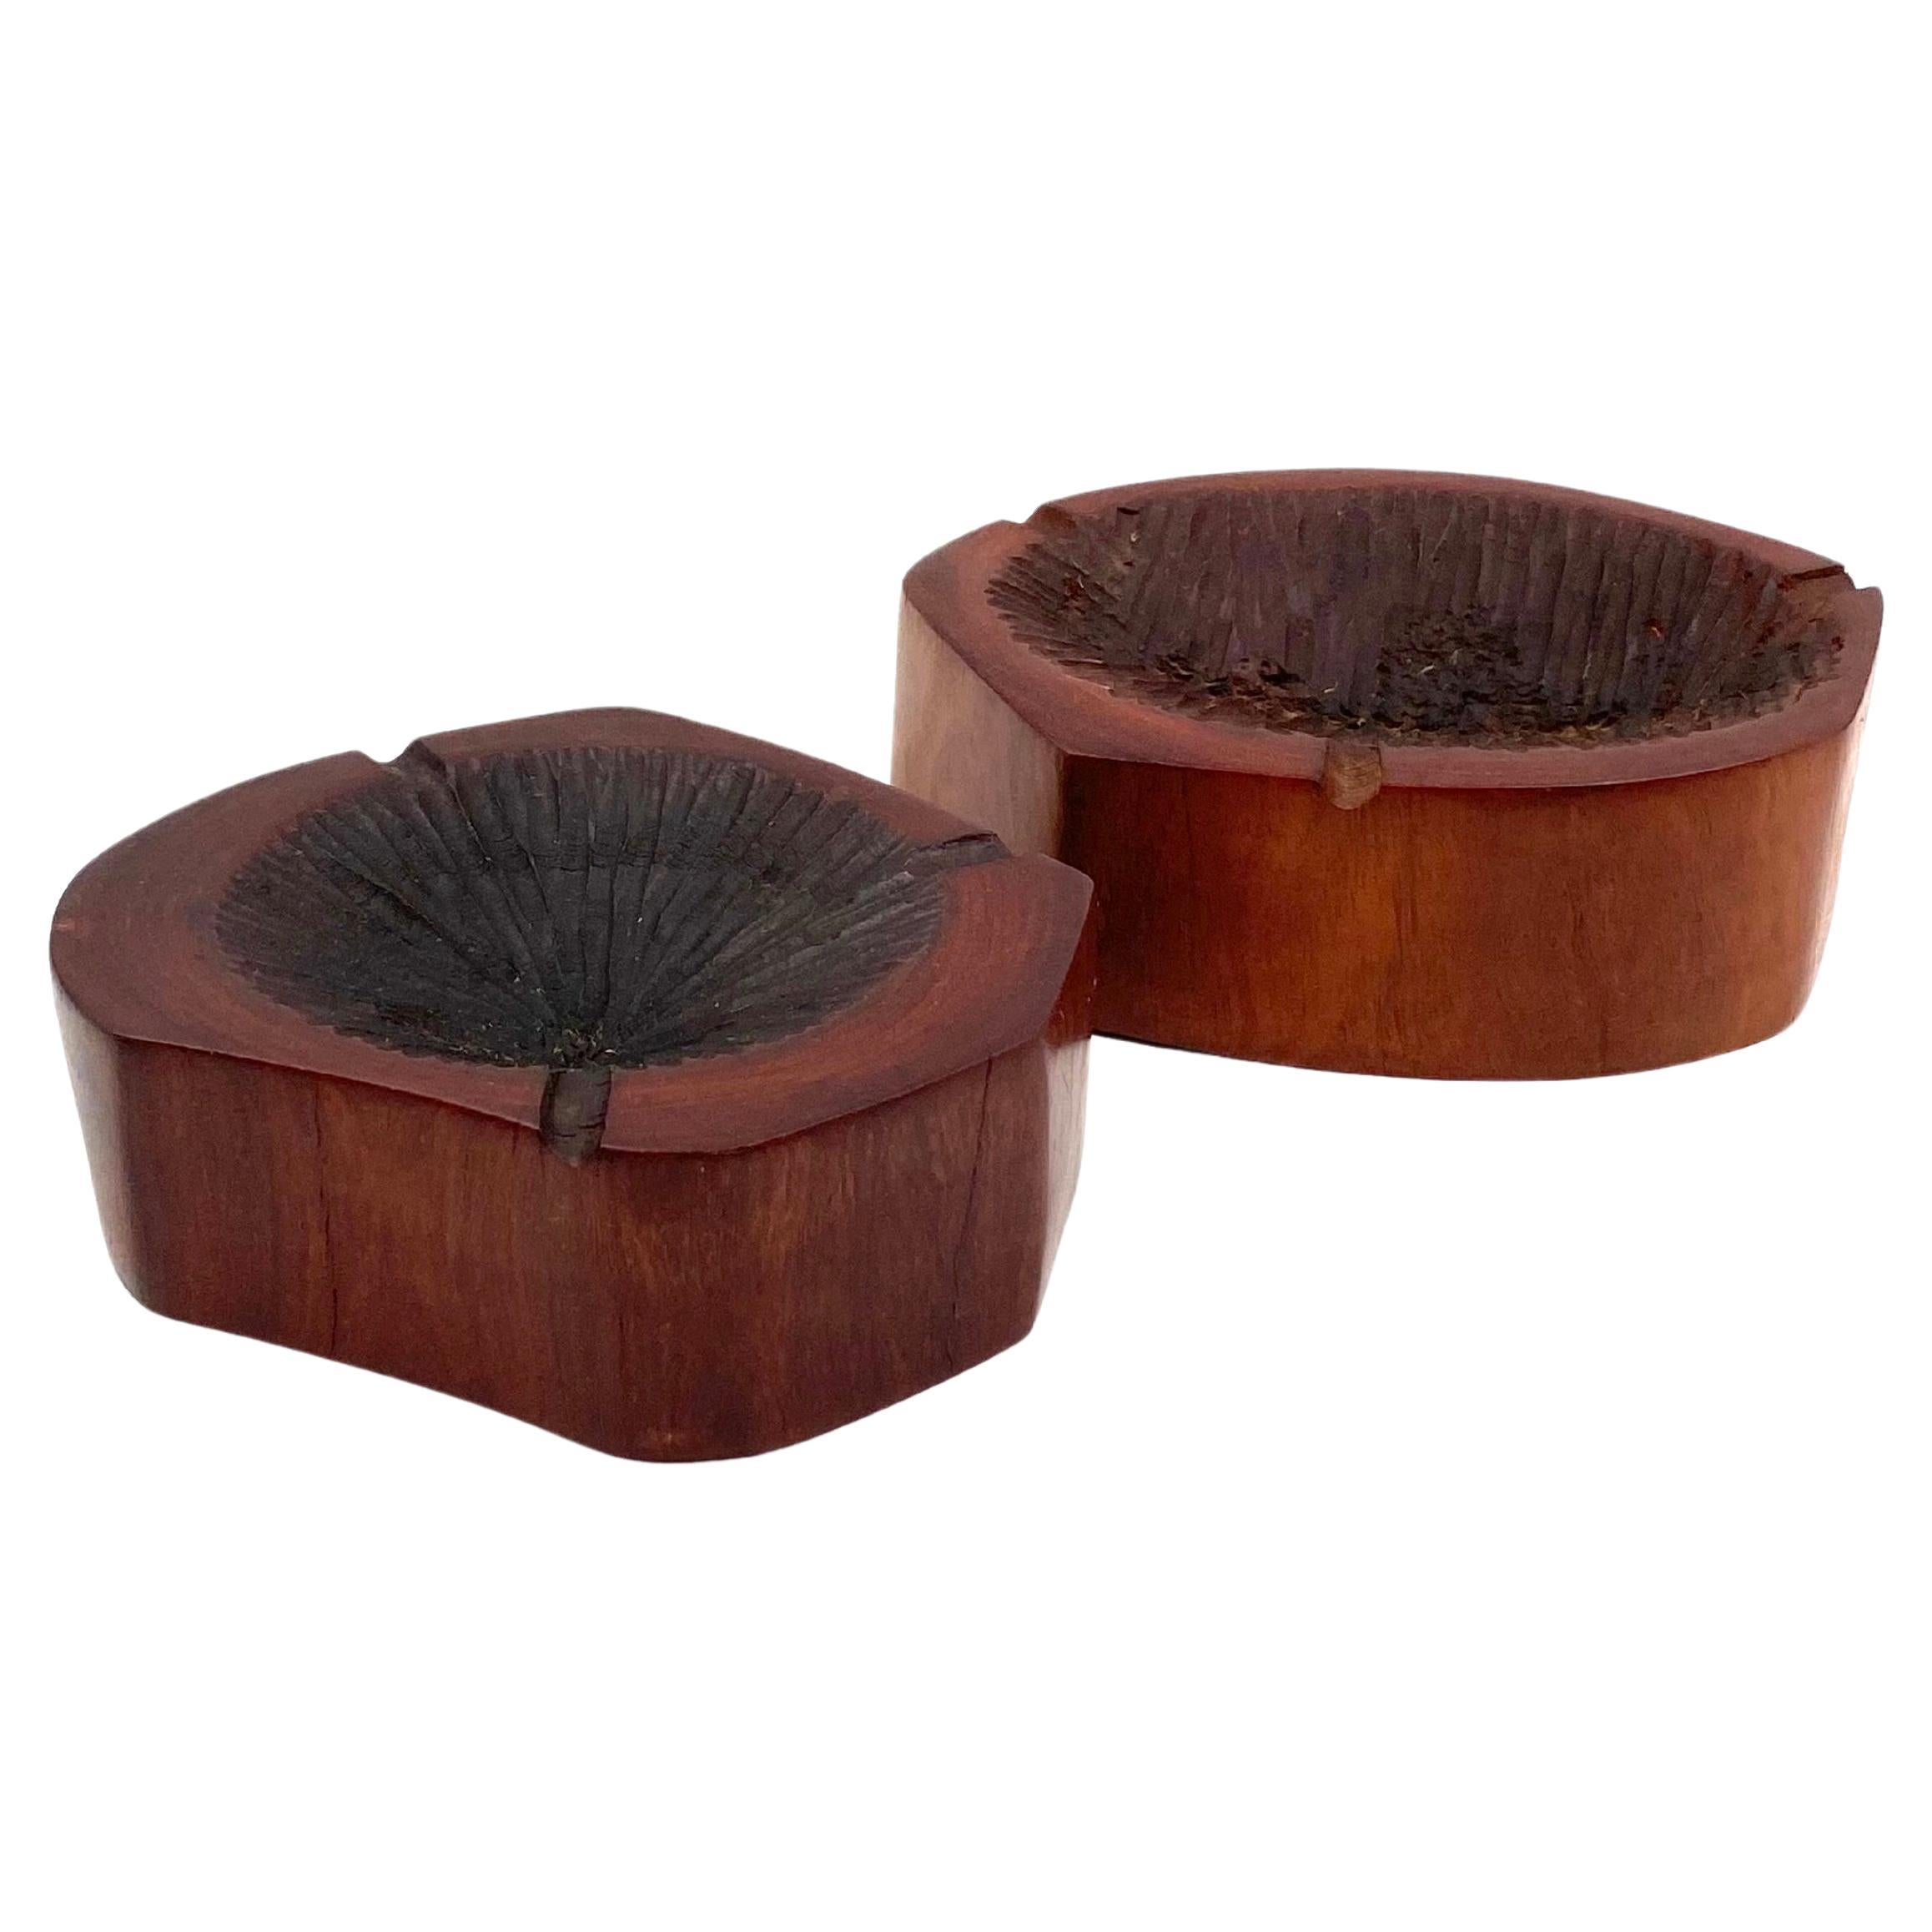 Organic modern set of 2 wood ashtrays, France 1970s For Sale